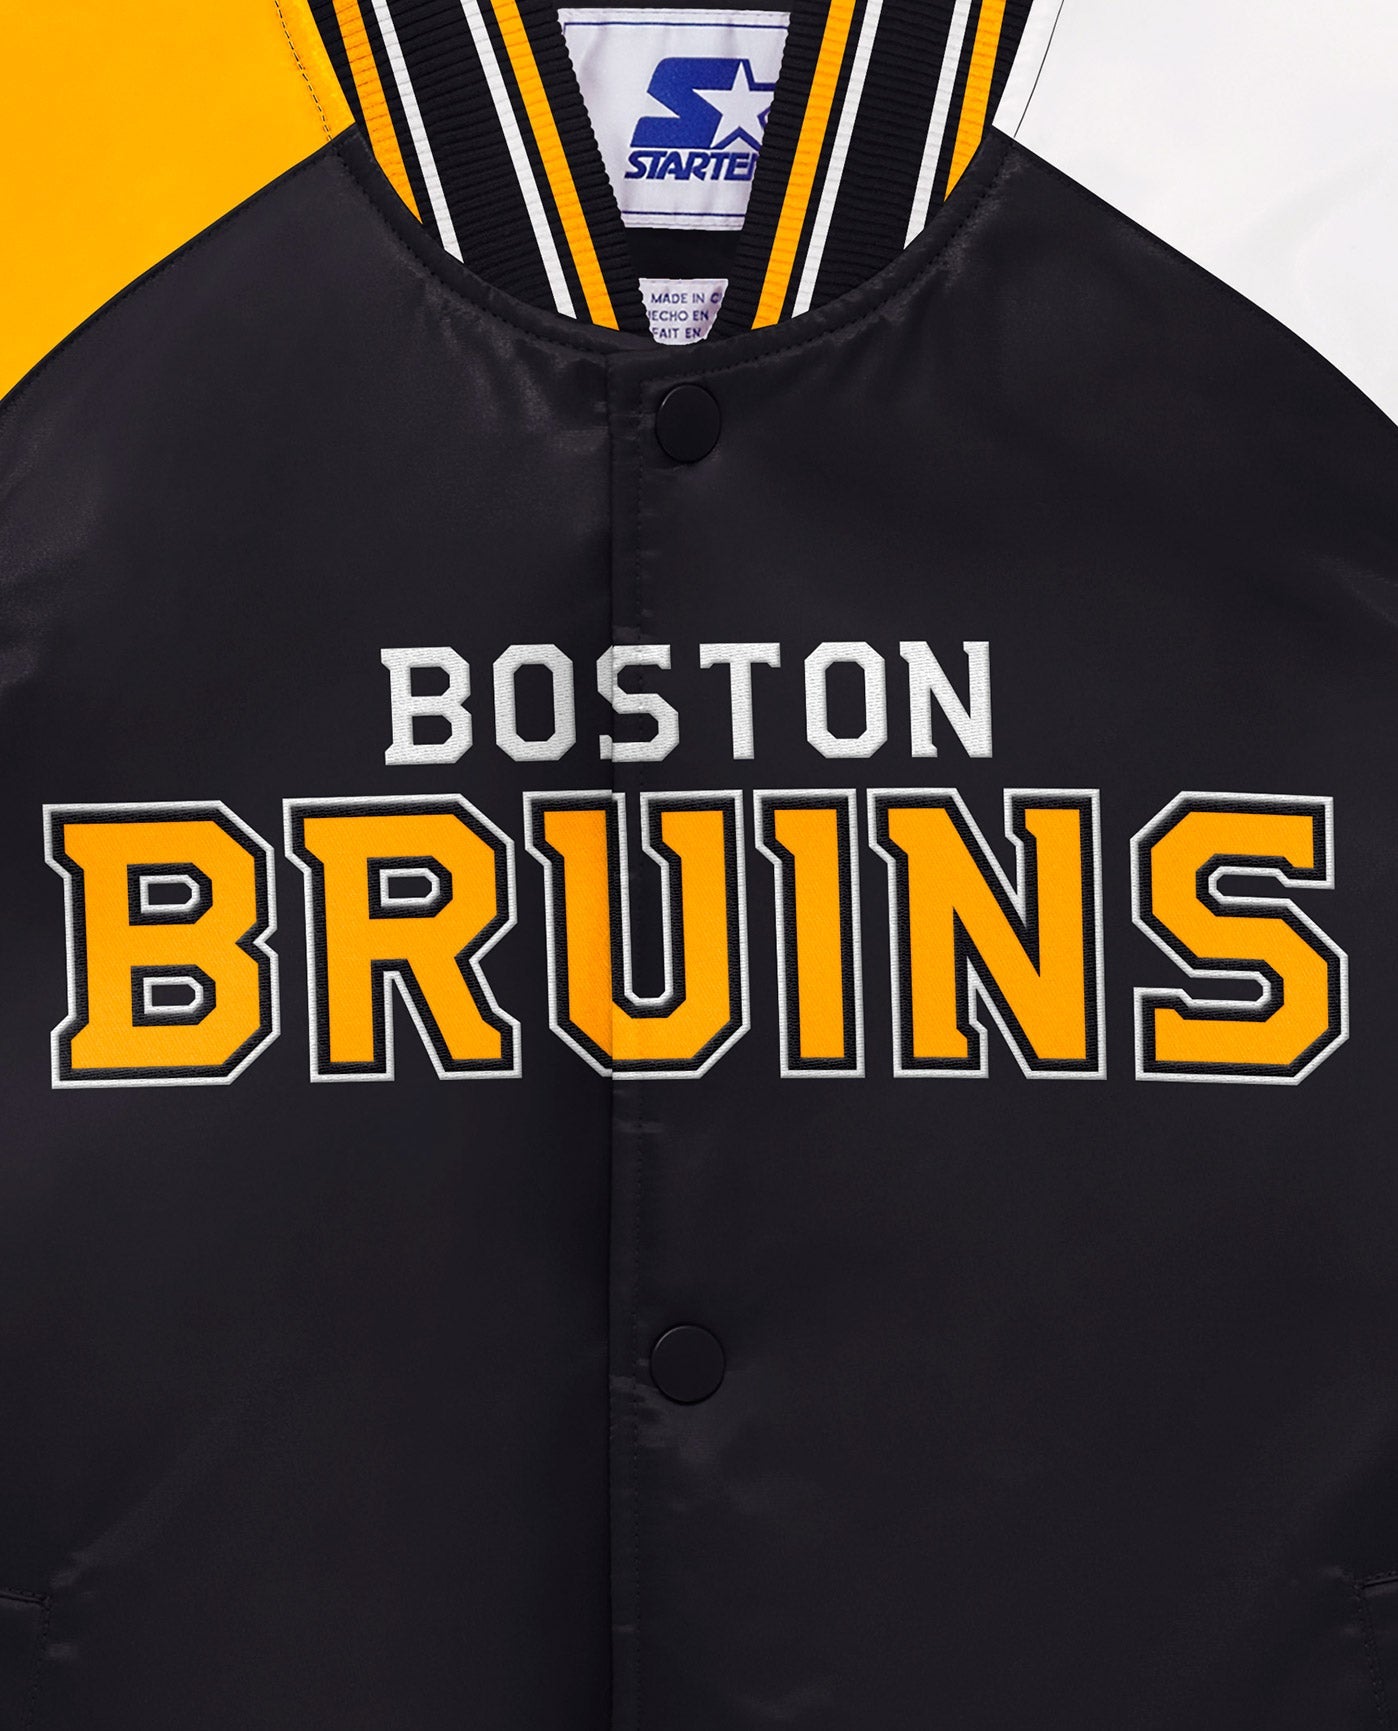 Boston Bruins Kids in Boston Bruins Team Shop 